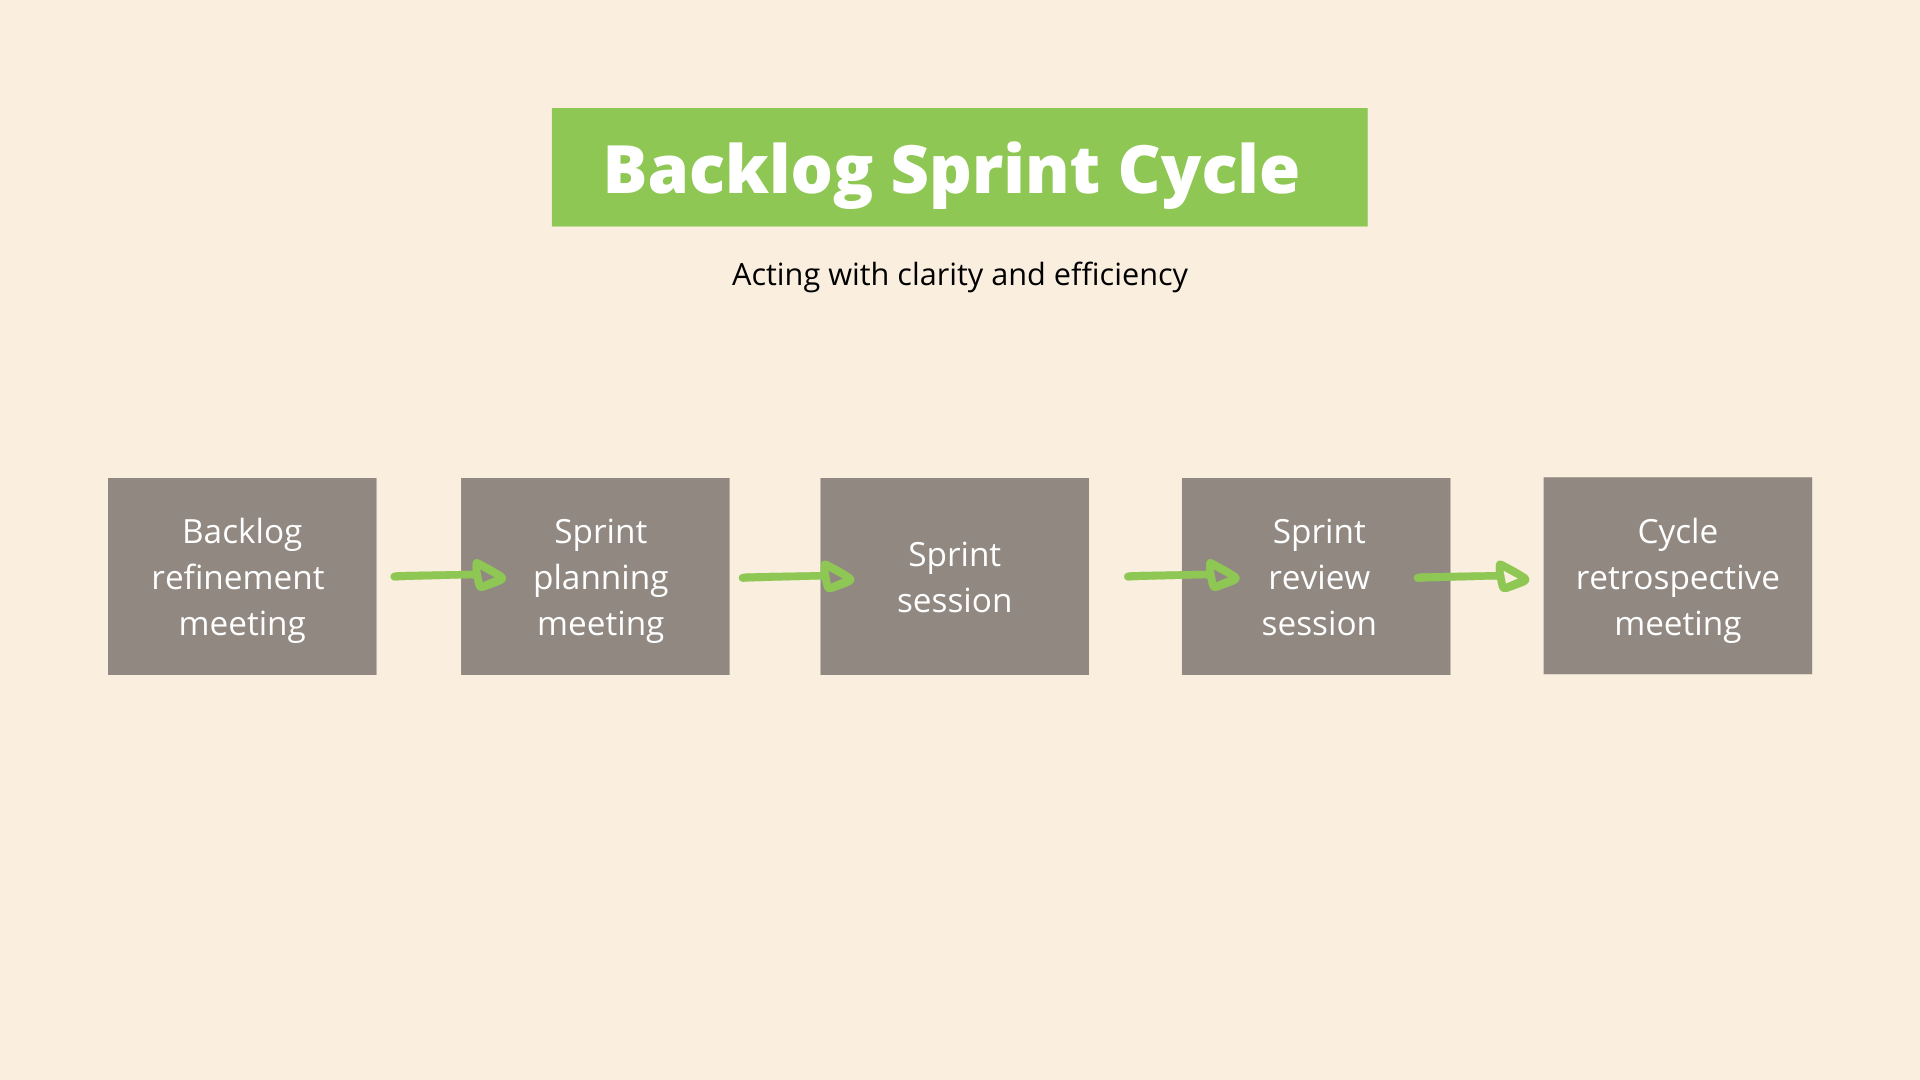 Product backlog sprints